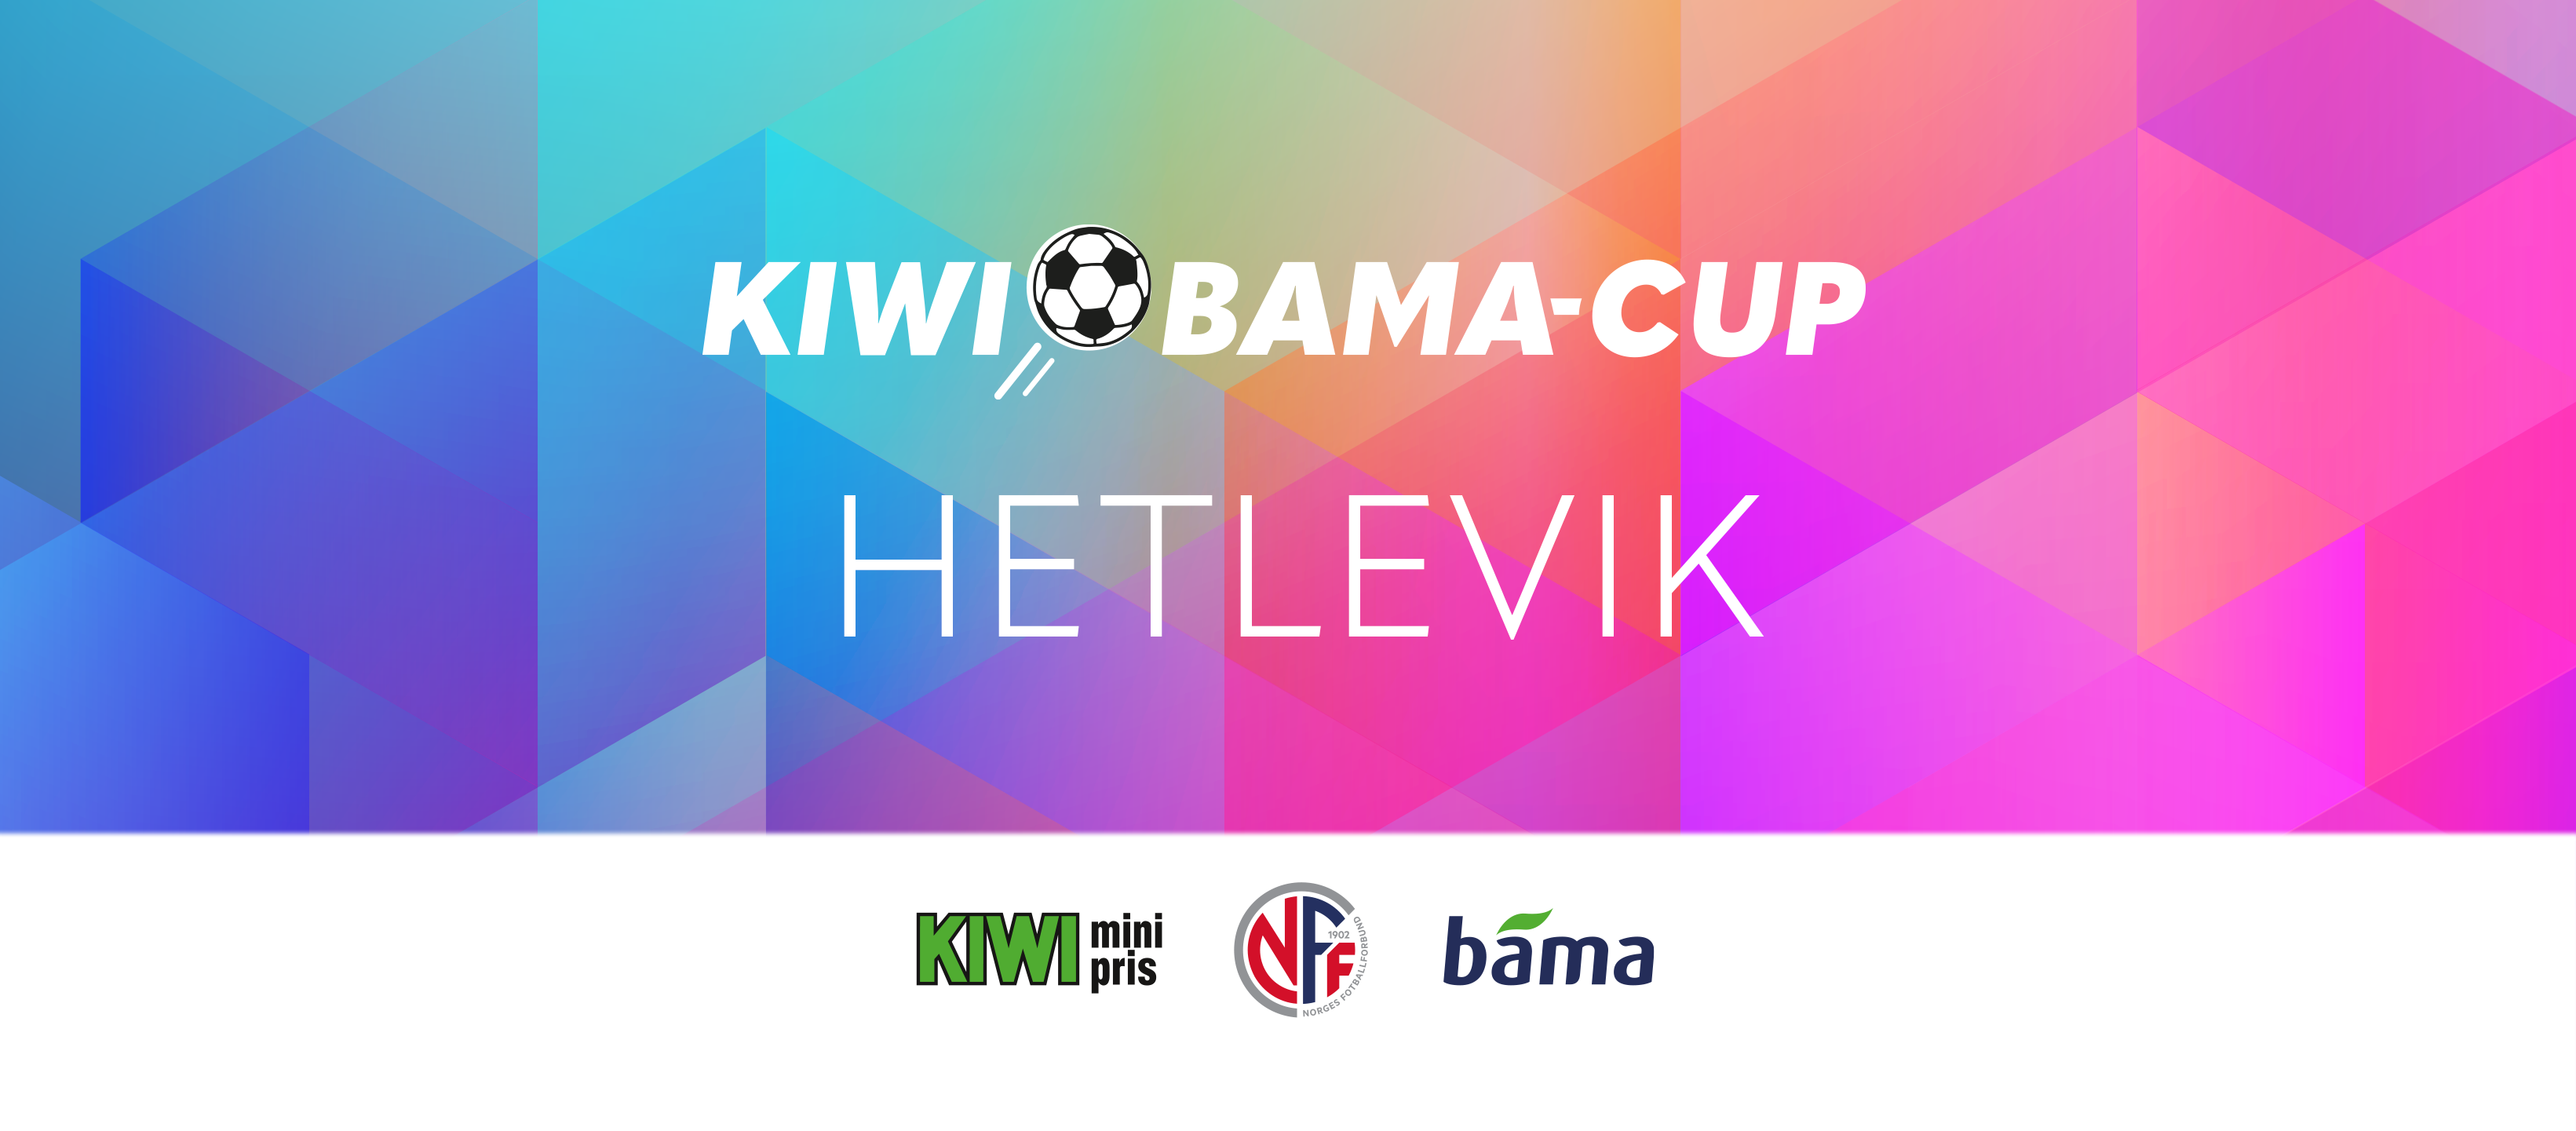 FB-BANNER KIWI-BAMA-Cup - Hetlevik.png